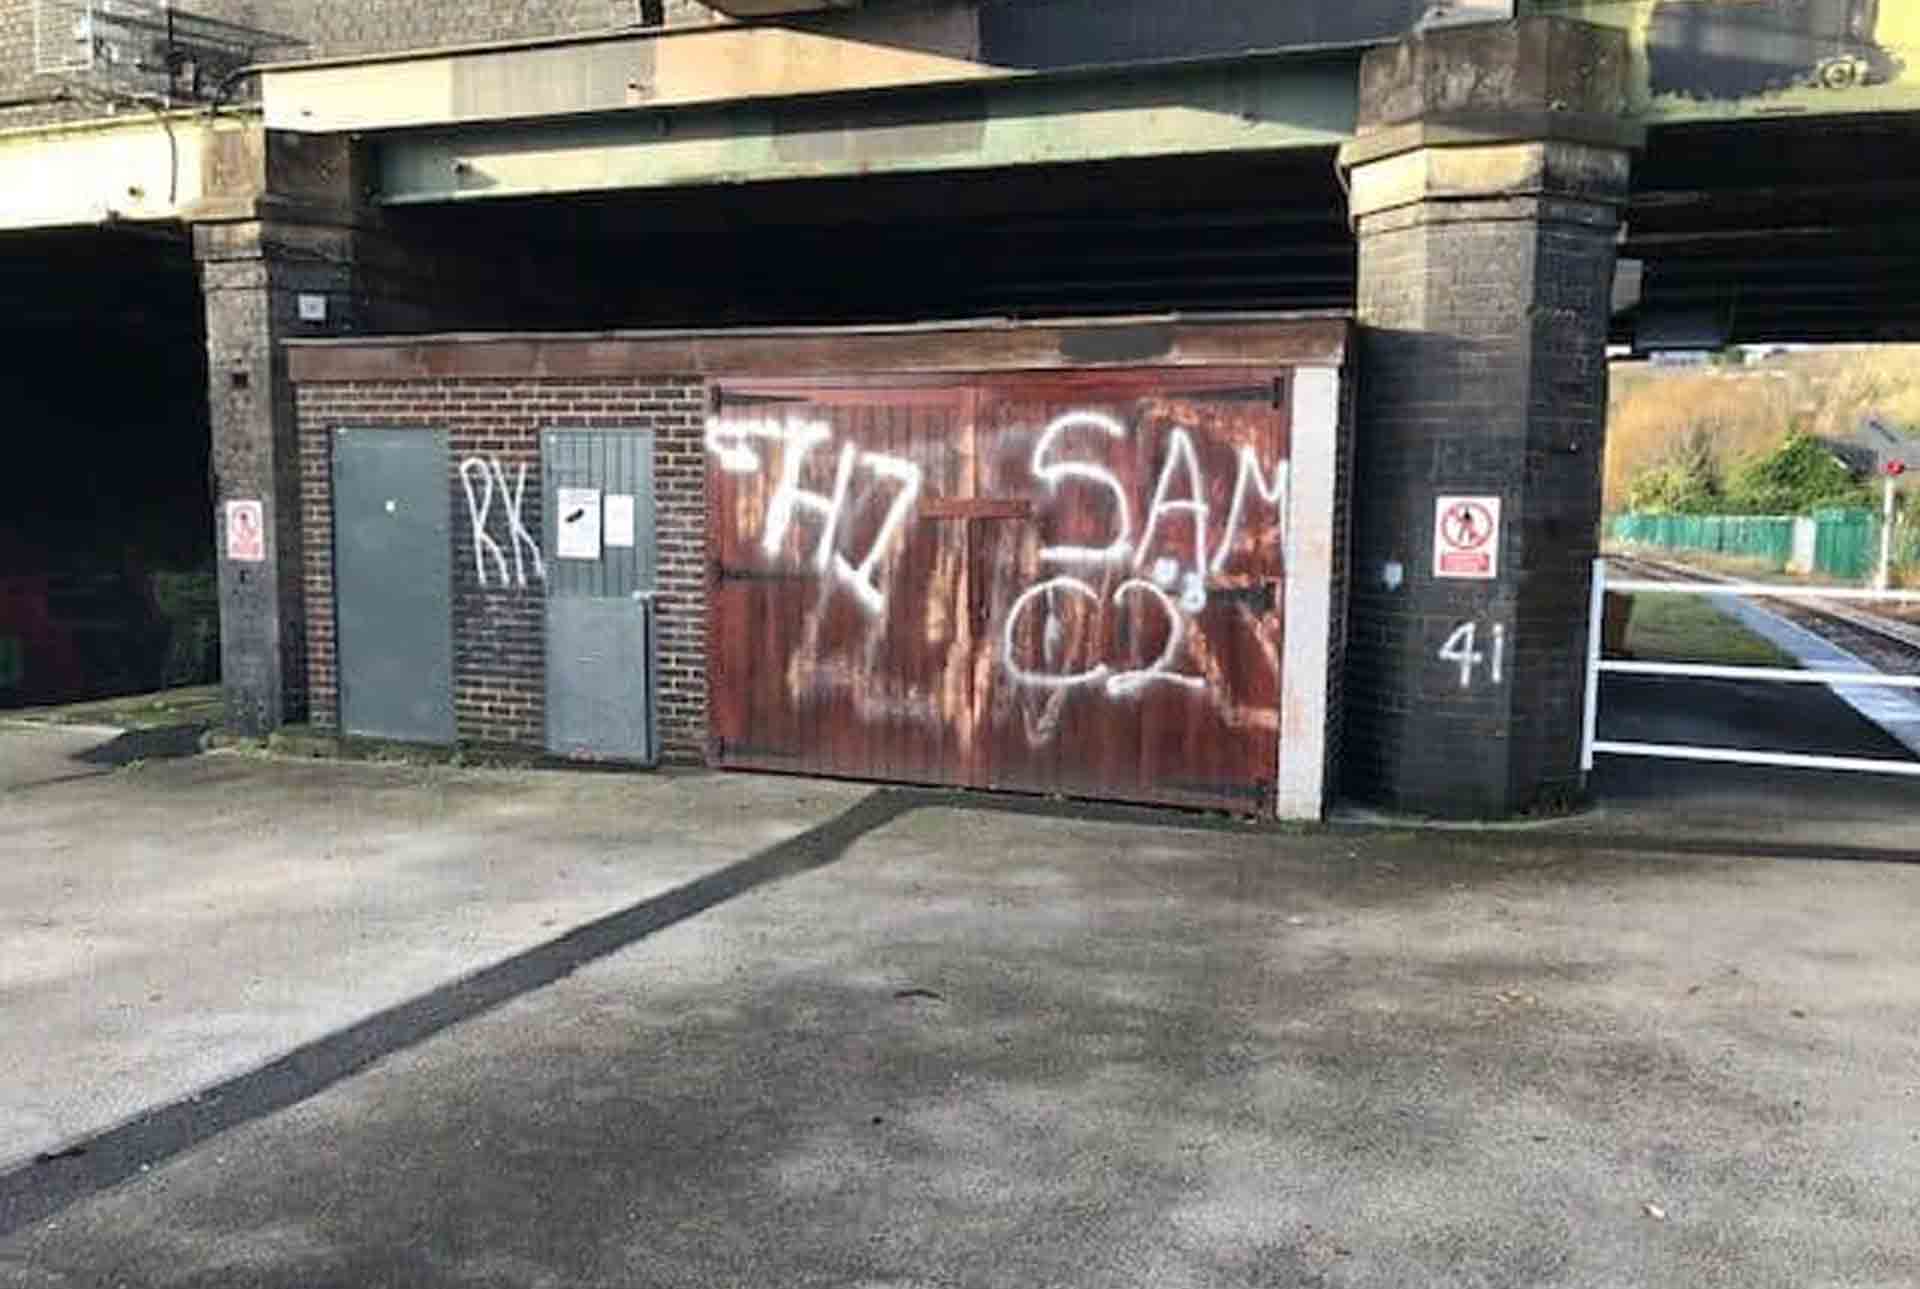 Graffiti vandals target Netherfield Station